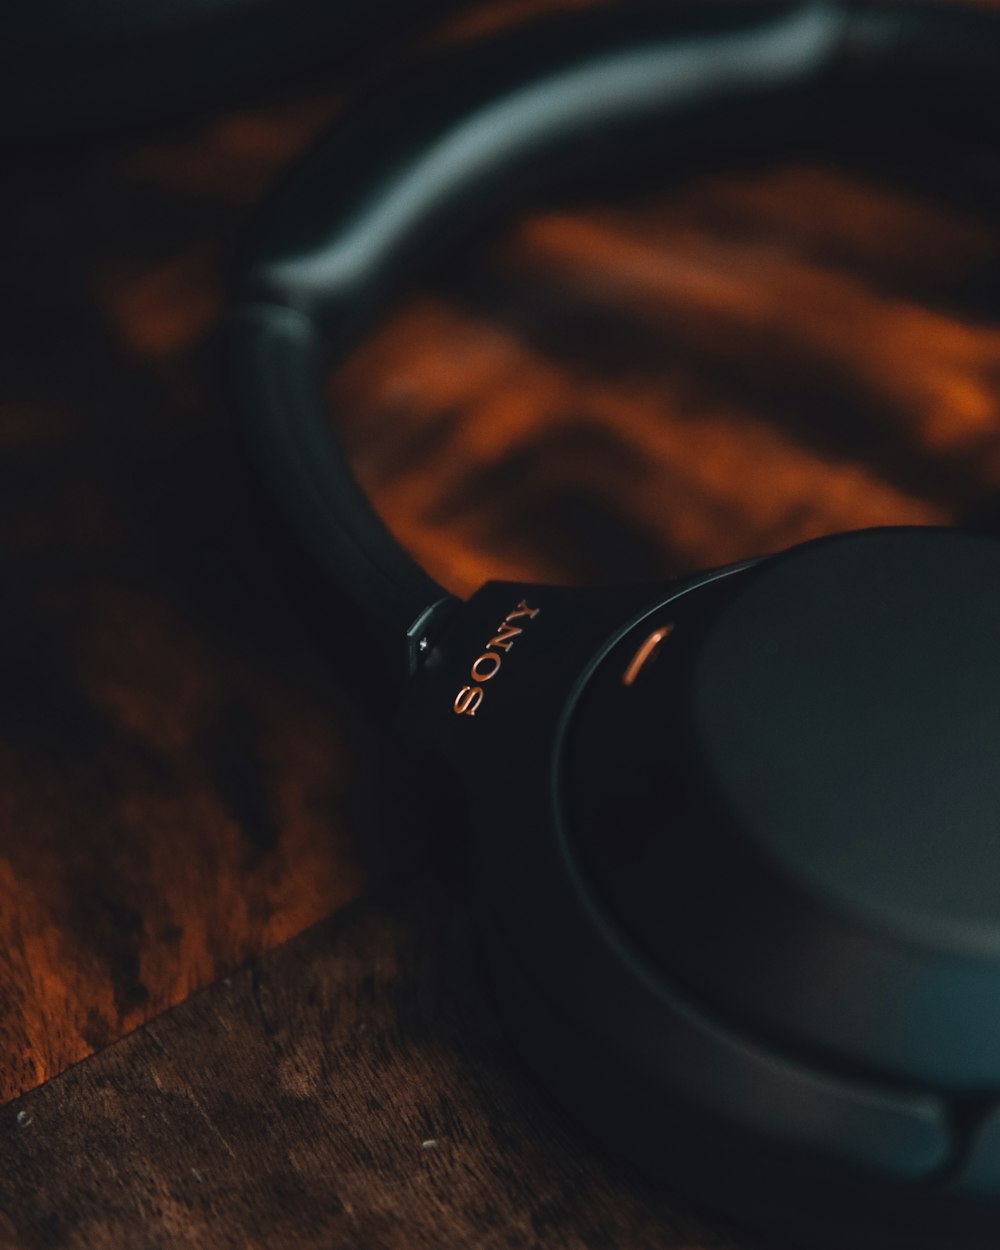 black sony headphones on brown wooden table